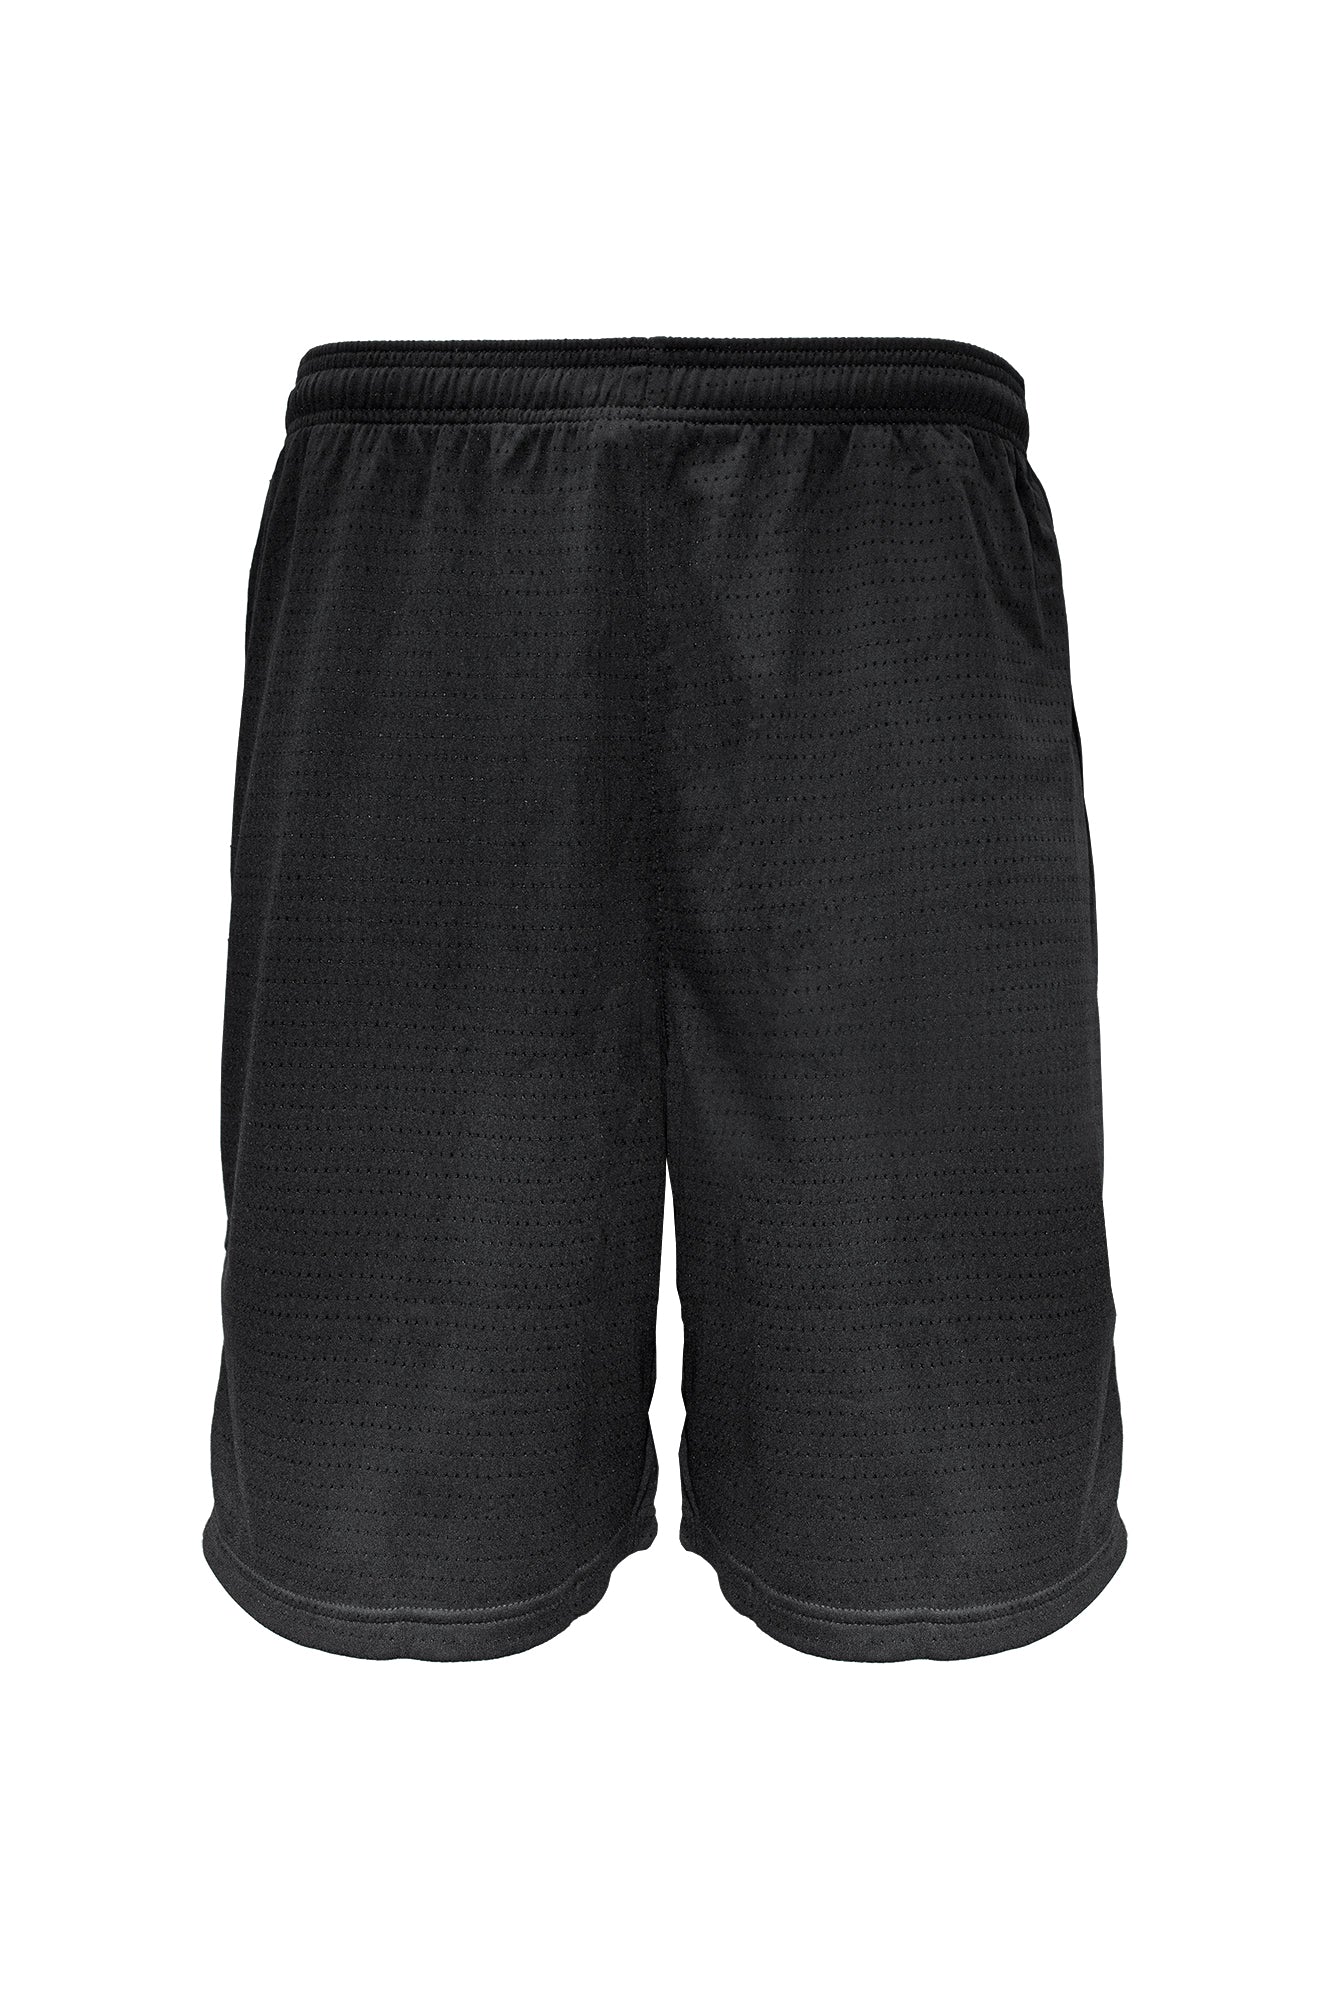 Swish Boys Basketball Shorts - Black